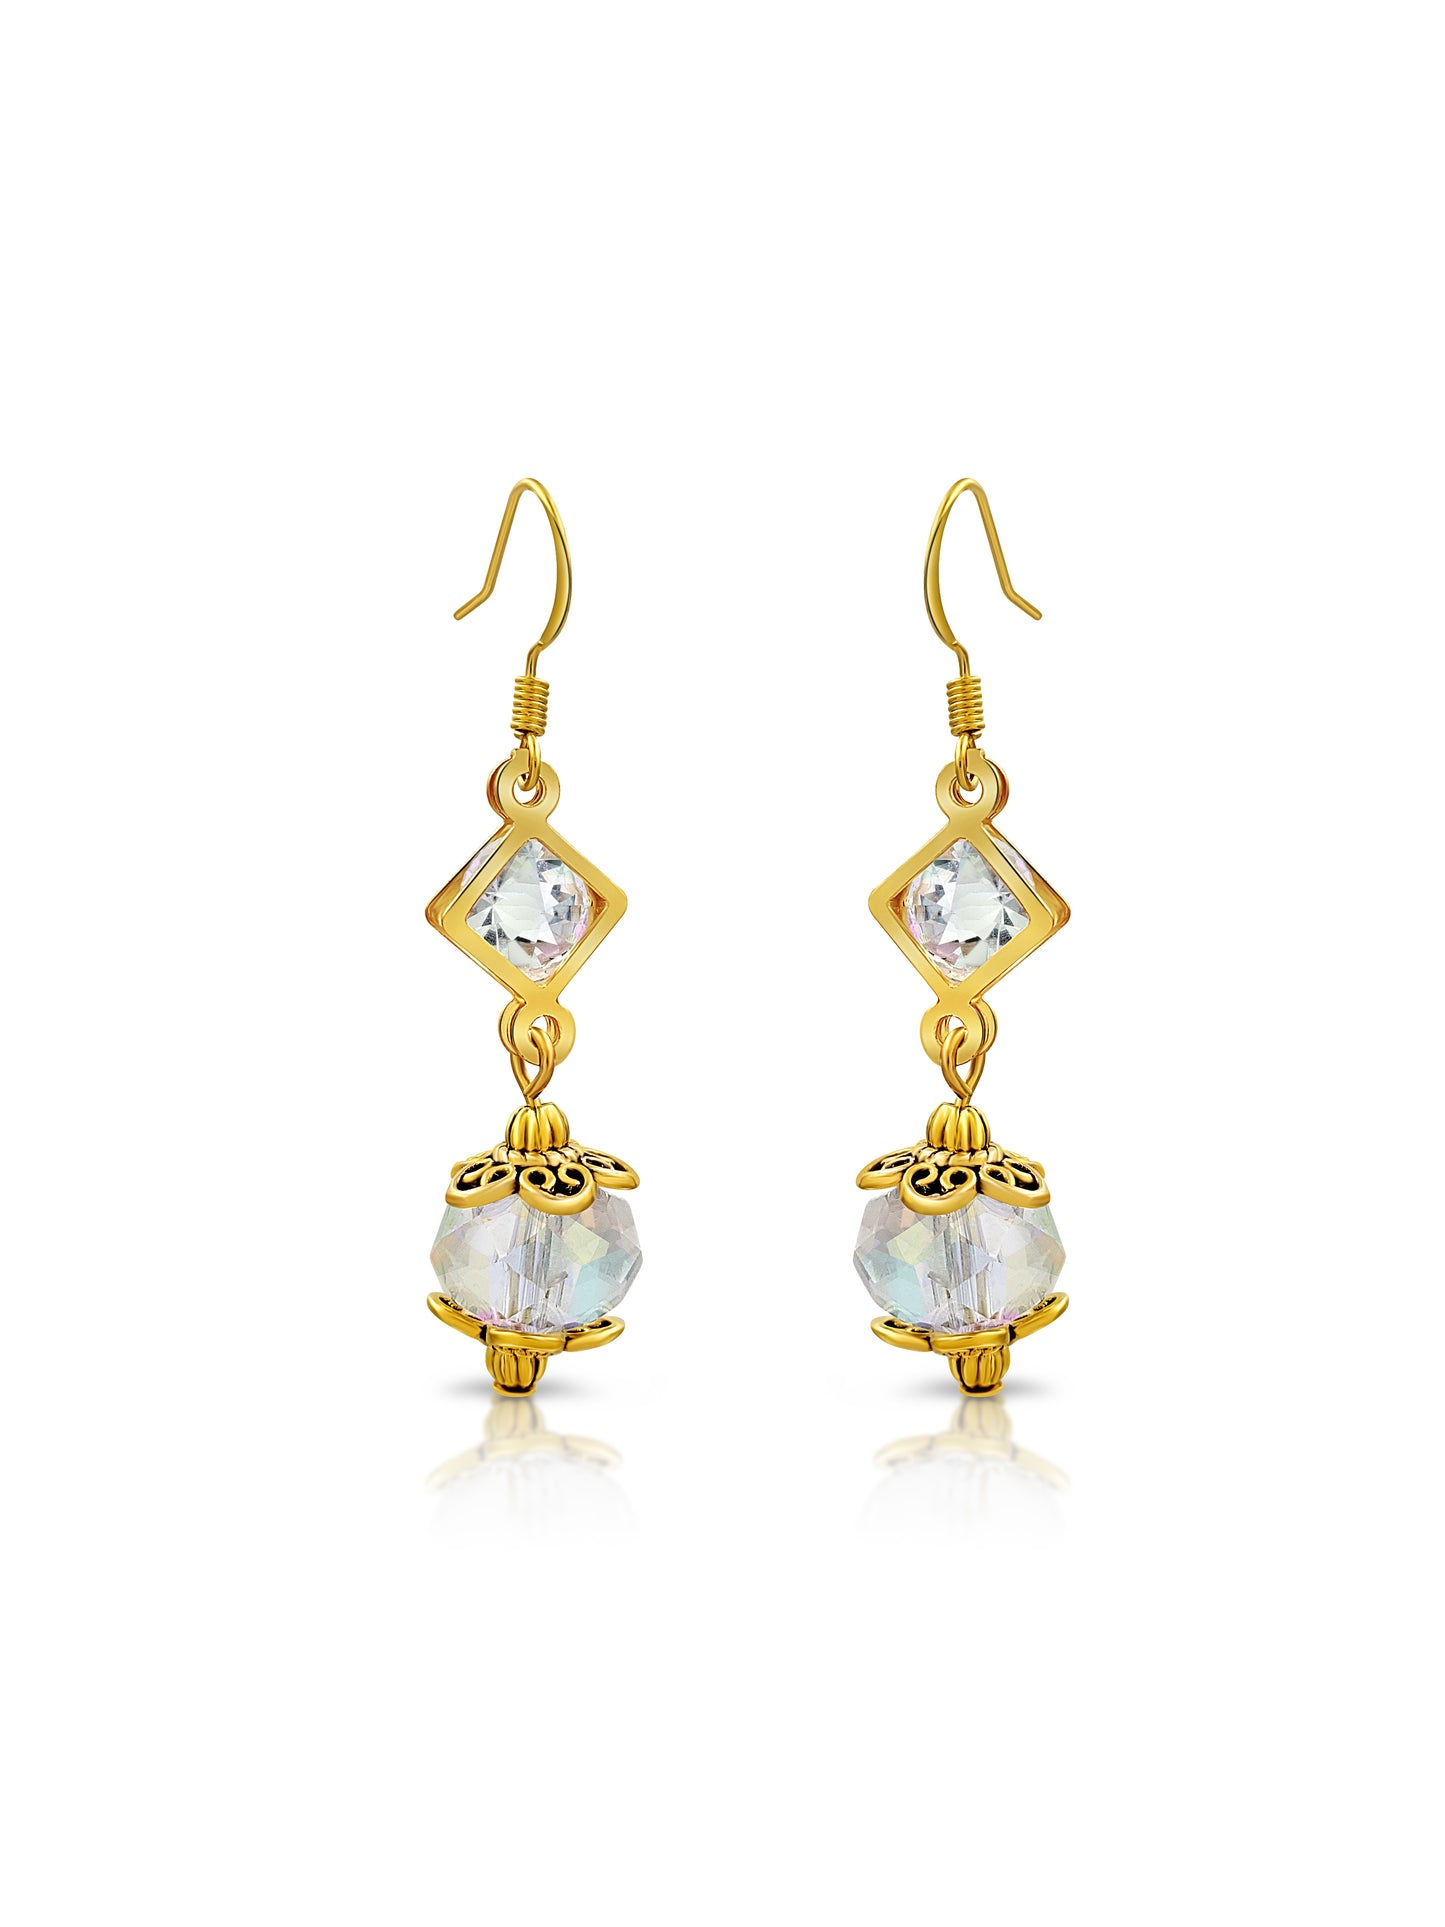 BESHEEK Goldtone and Clear Crystal Filigree Capped Dangle Earrings | Hypoallergenic Boho Beach Gala Wedding Style Fashion Earrings